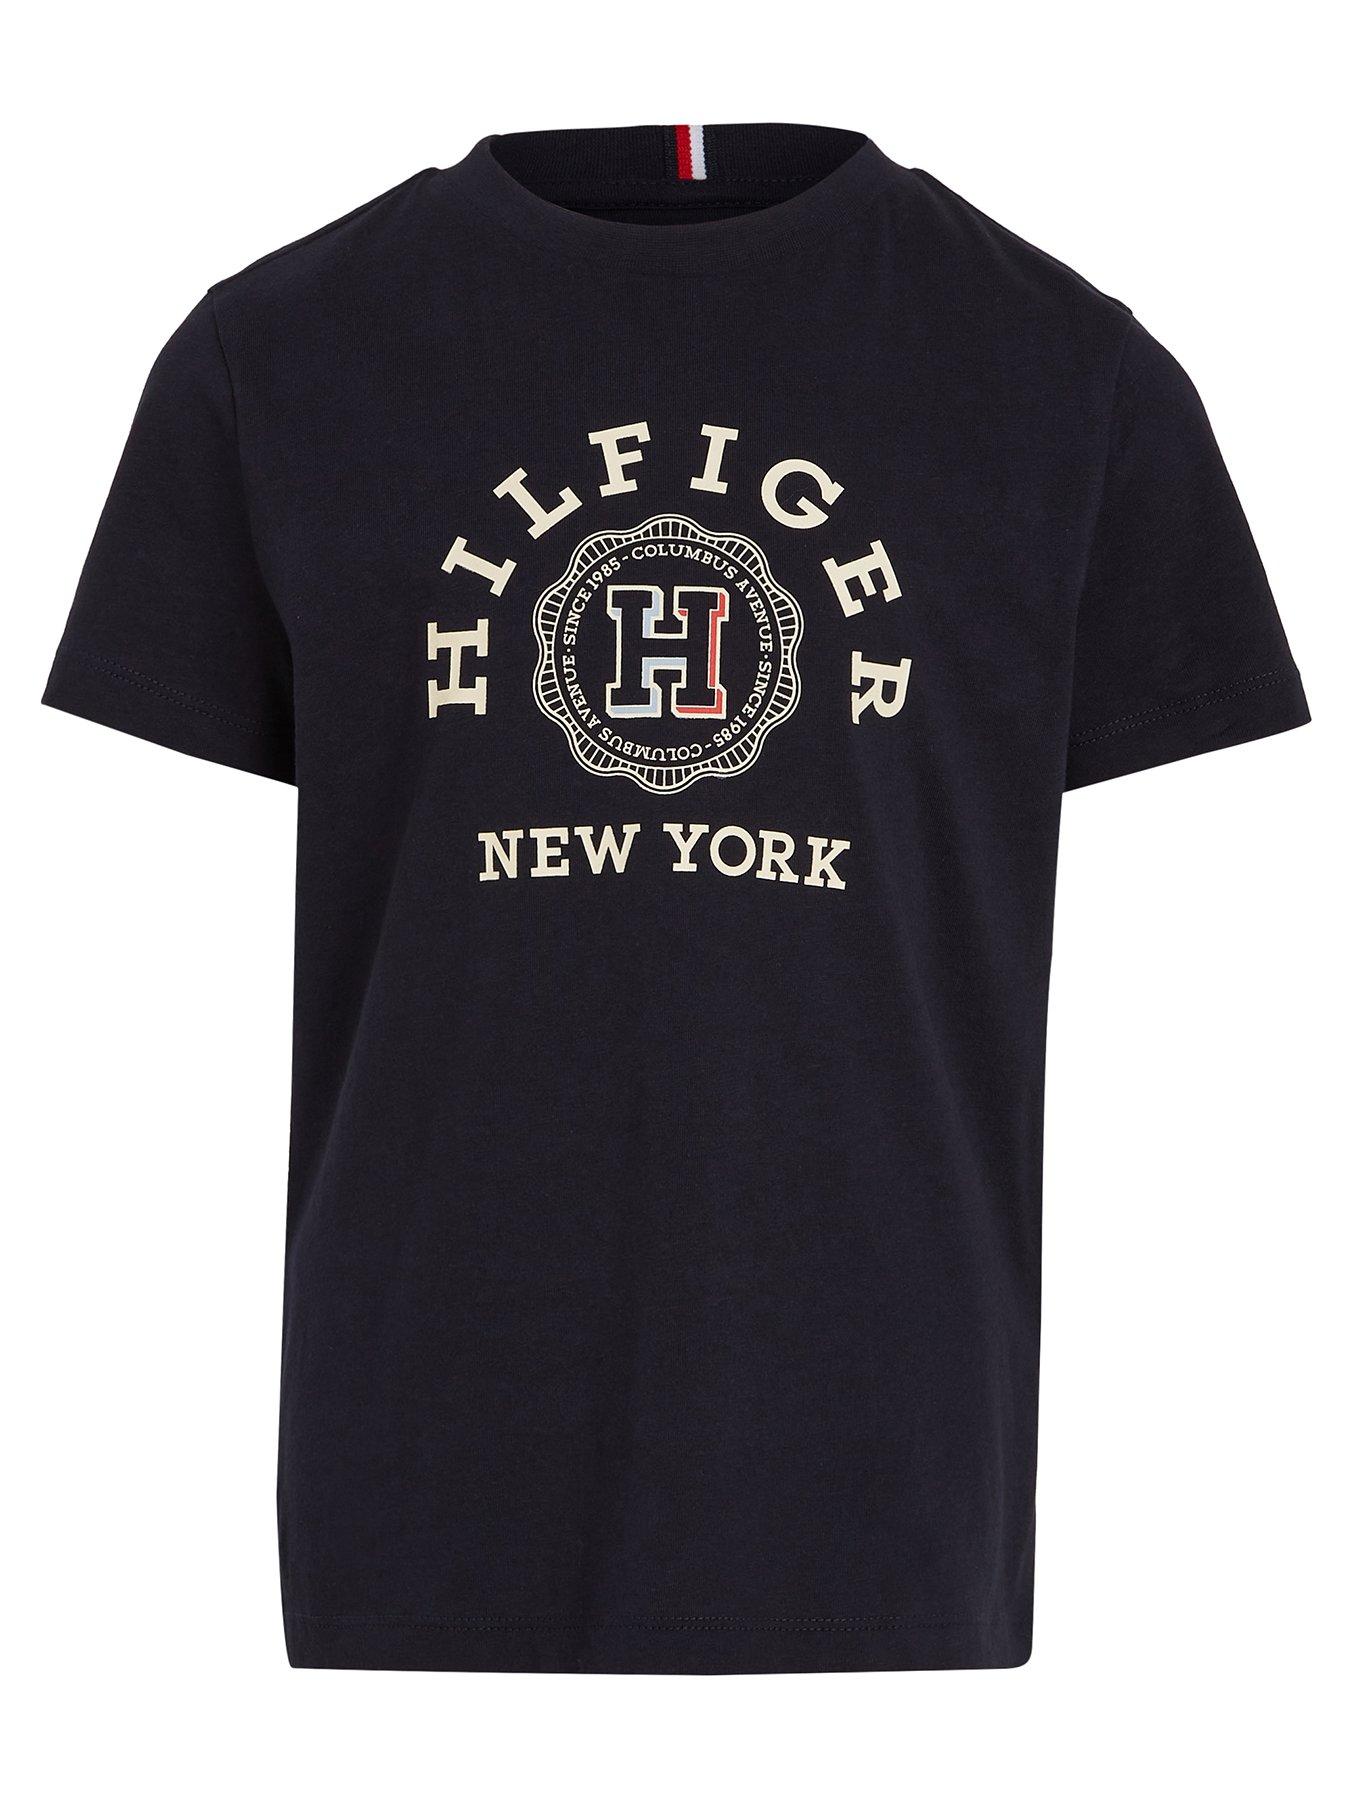 Tommy hilfiger New York Short Sleeve T-Shirt